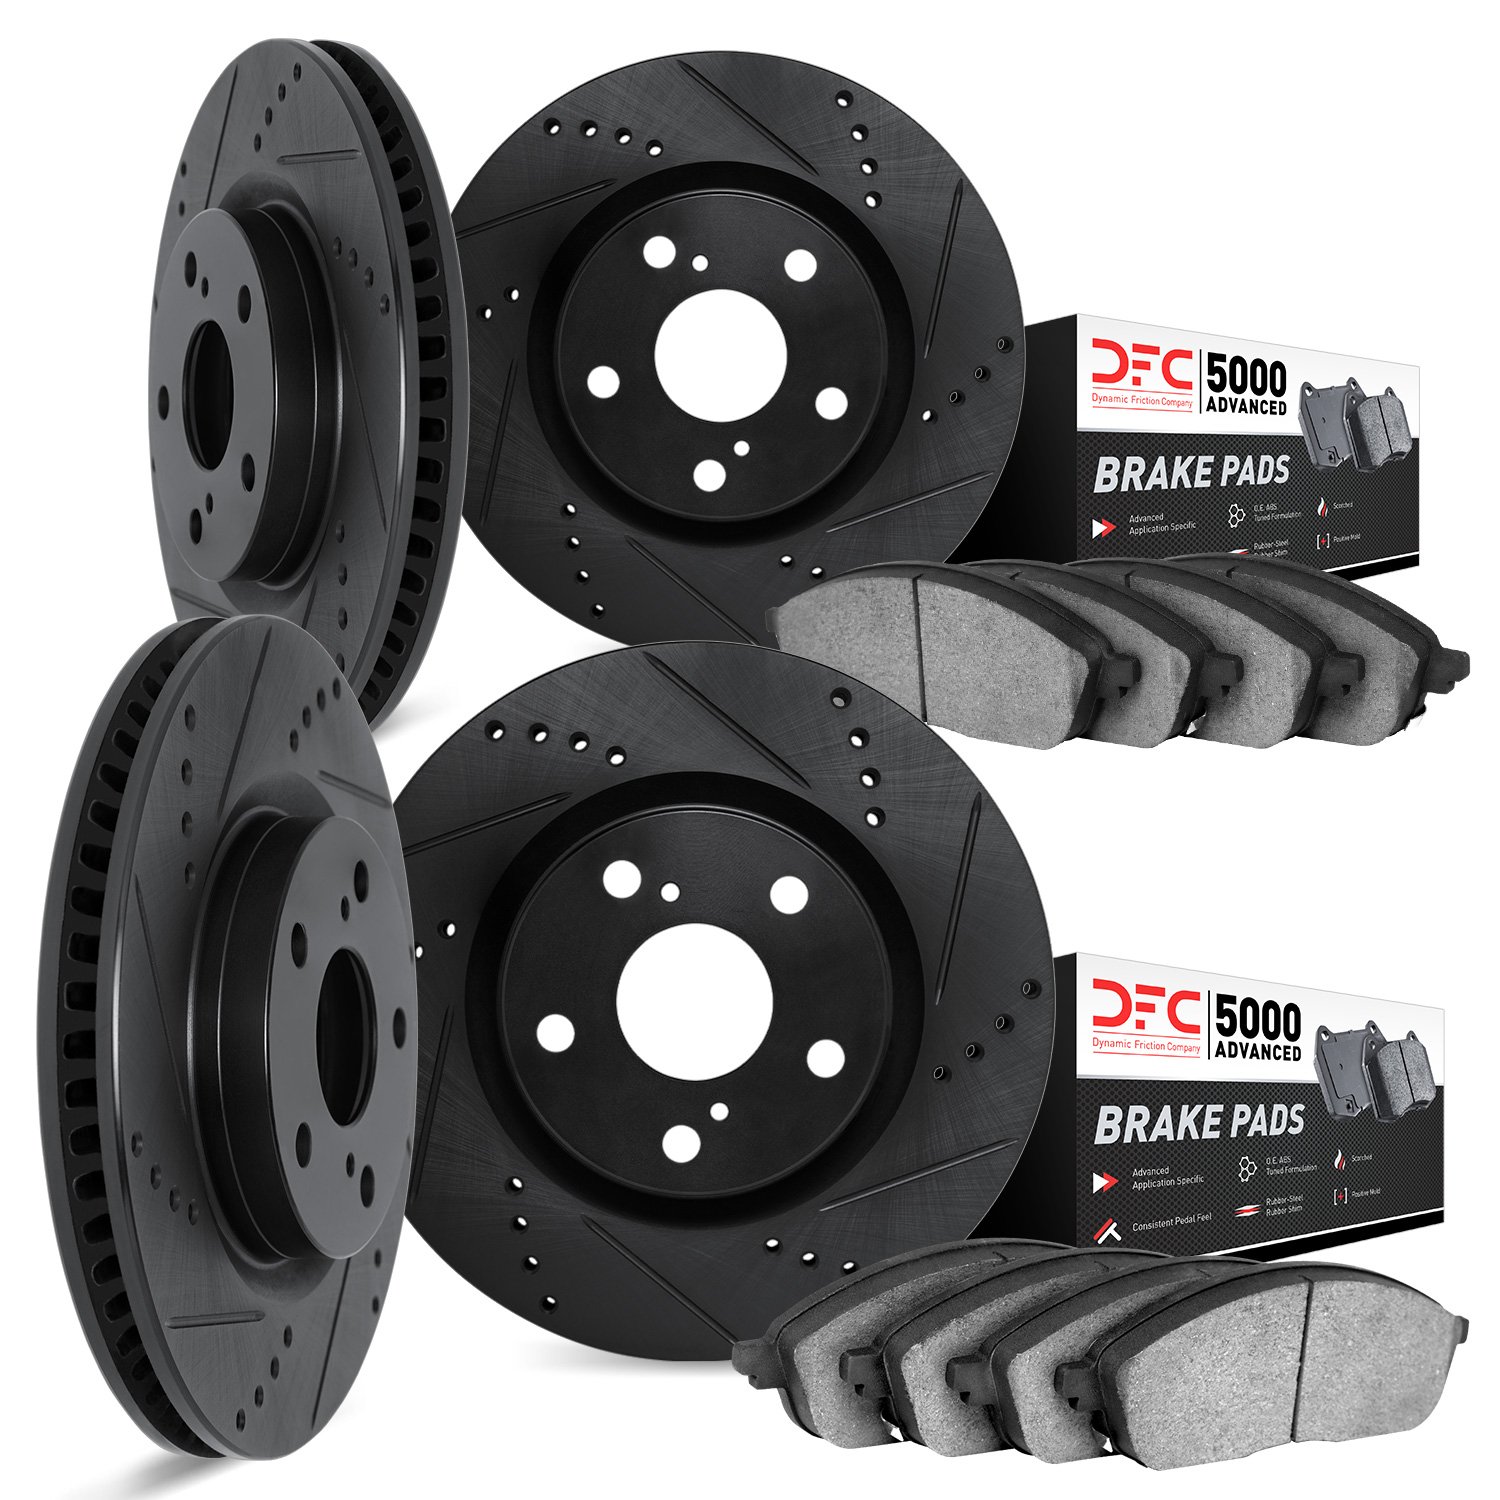 8504-54282 Drilled/Slotted Brake Rotors w/5000 Advanced Brake Pads Kit [Black], 2007-2011 Ford/Lincoln/Mercury/Mazda, Position: